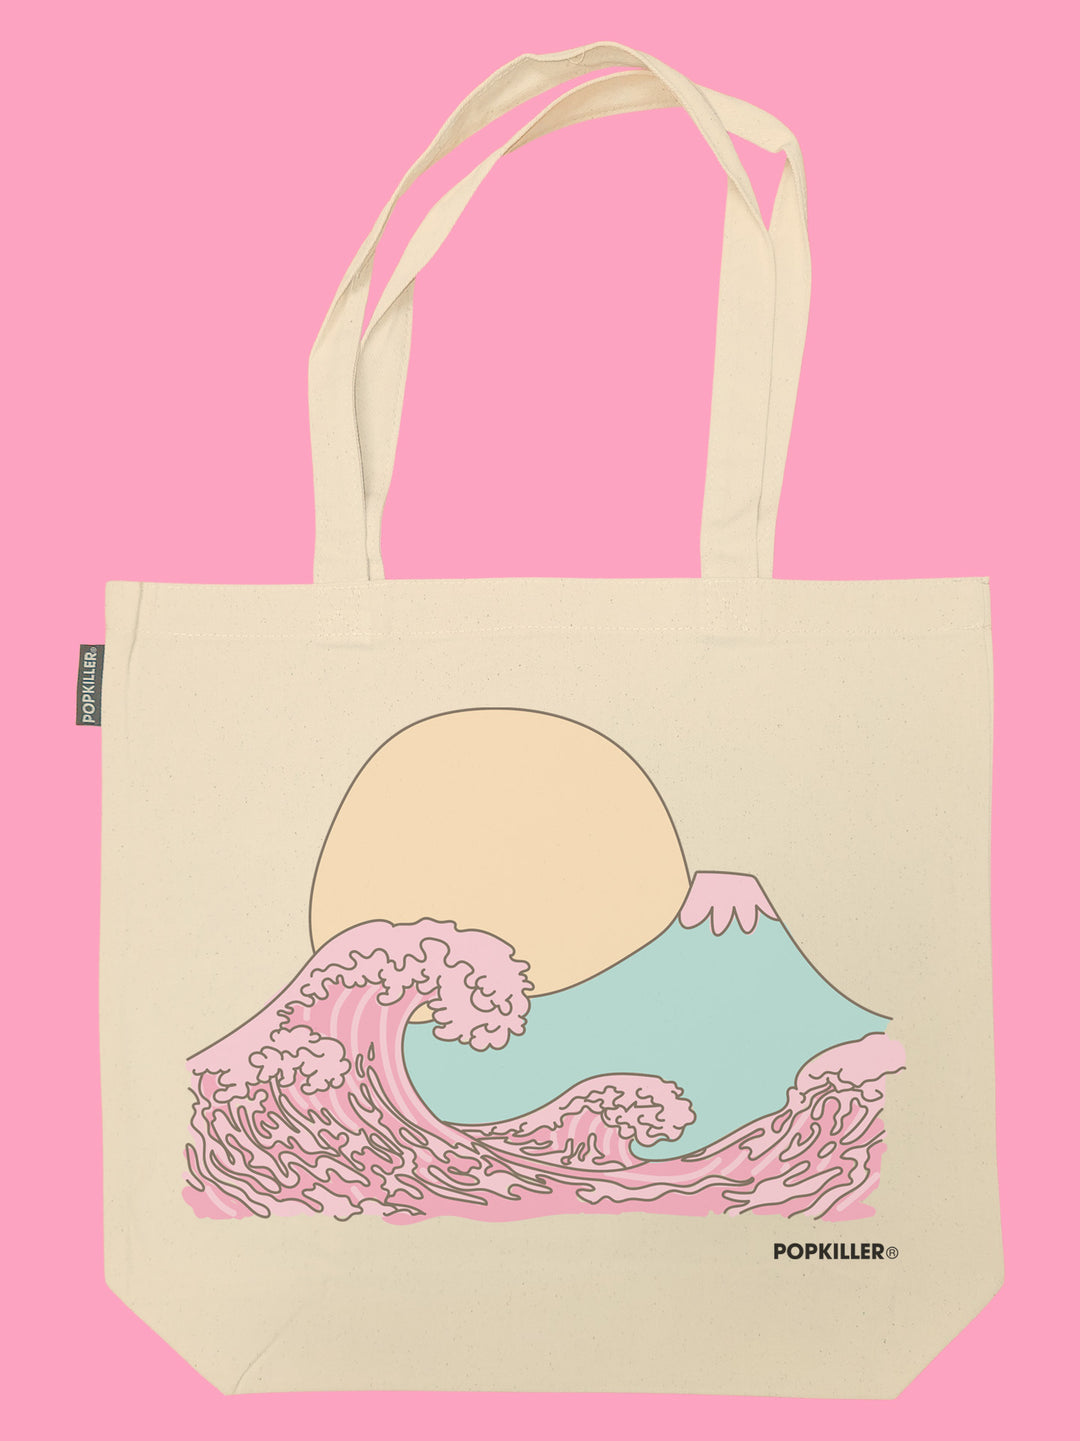 Pastel Wave Tote Bag